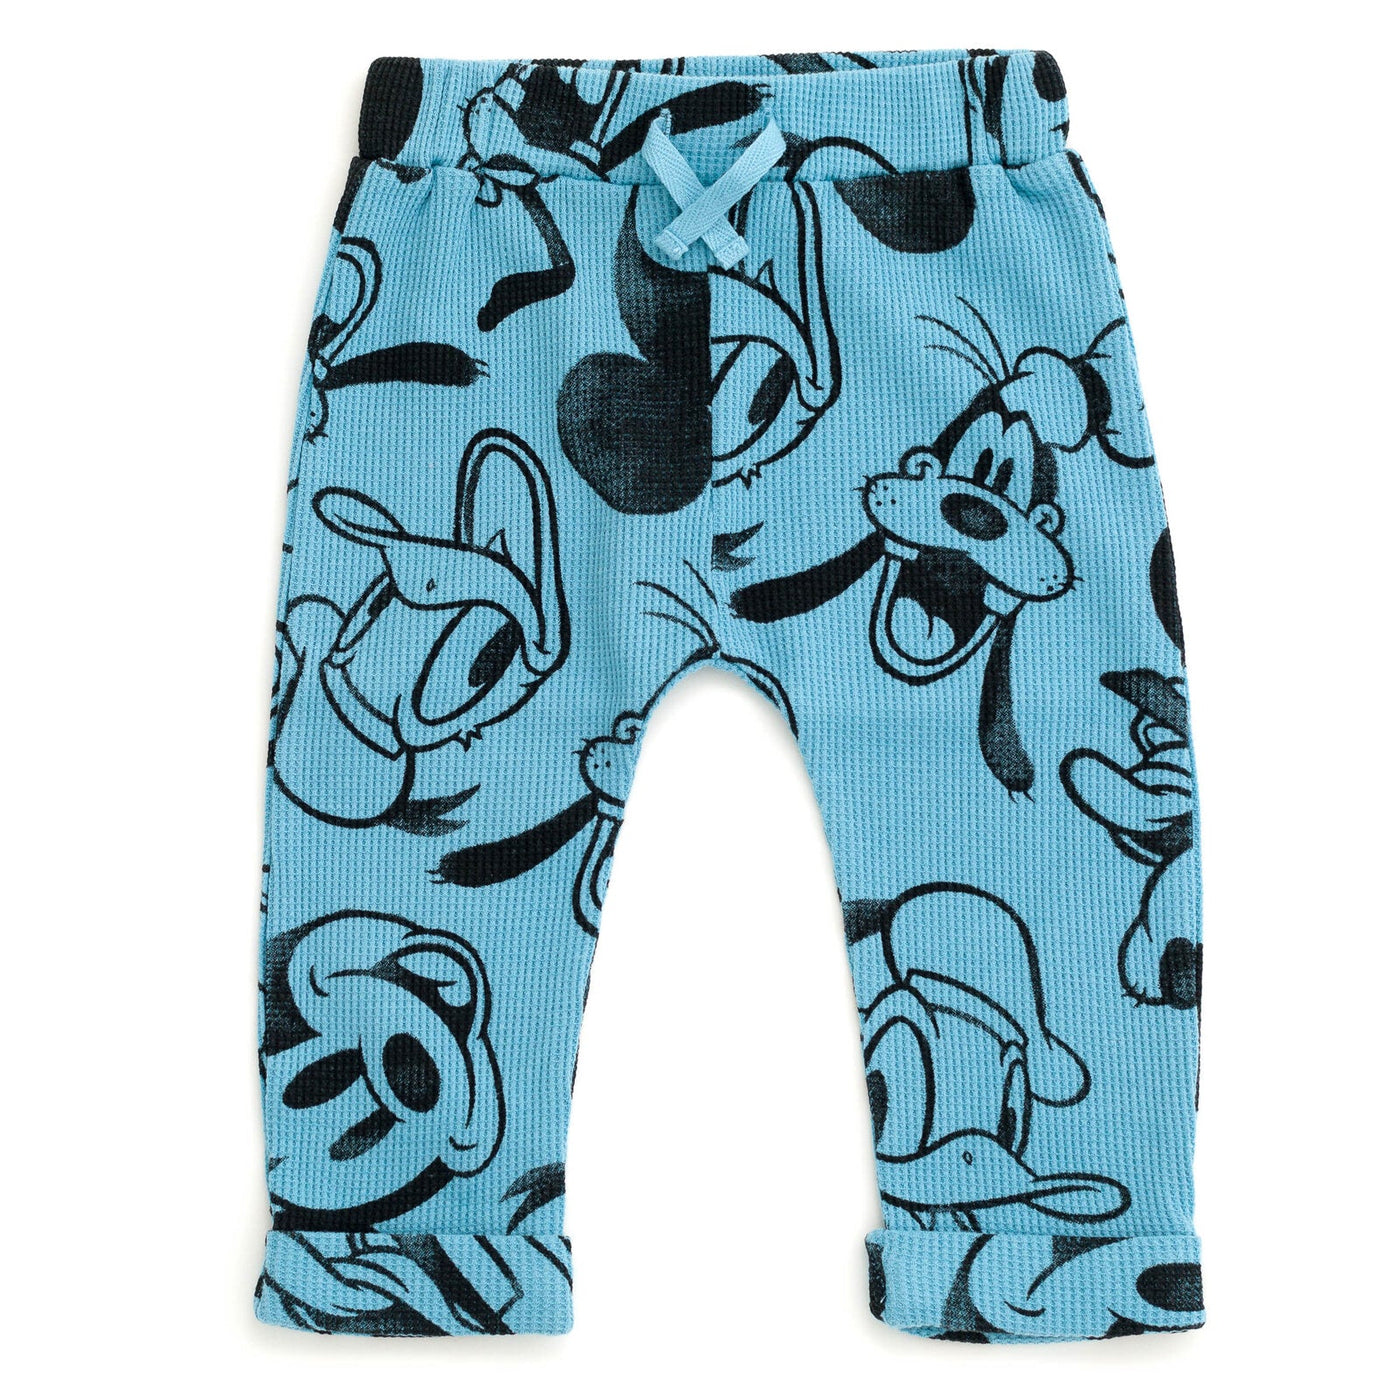 Disney Mickey Mouse Waffle Knit Drop Shoulder Sweatshirt and Jogger Pants Outfit Set - imagikids